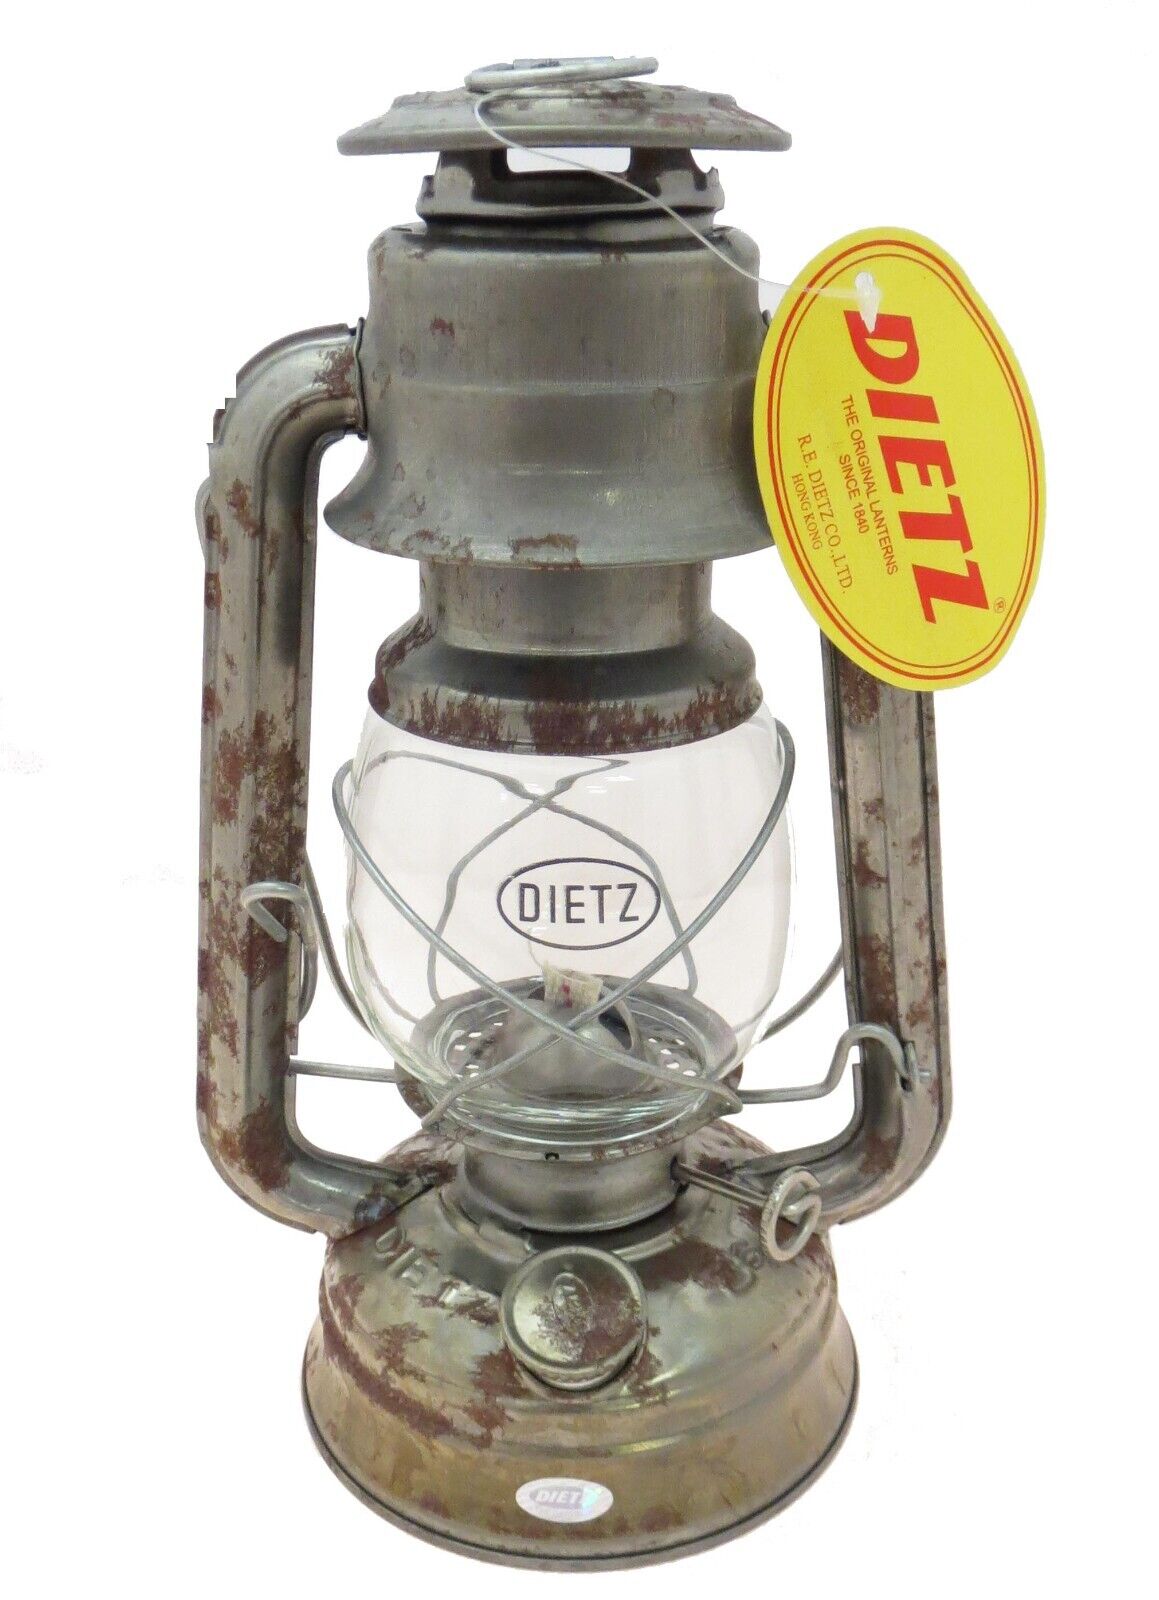 Dietz #76 Original Oil Burning Lantern (Unfinished Rusty)